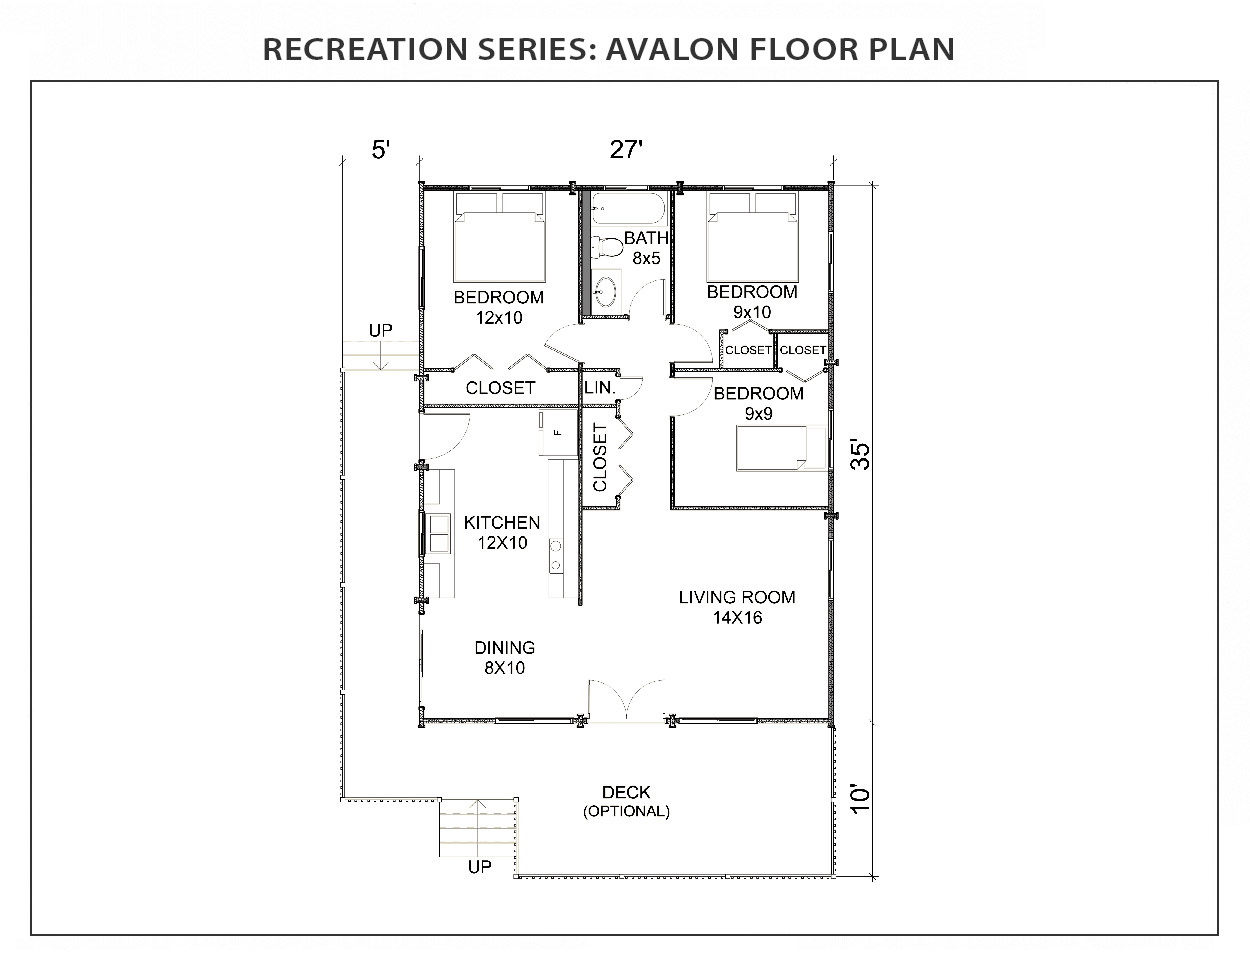 Avalon Floor Plan Recreation Series IHC